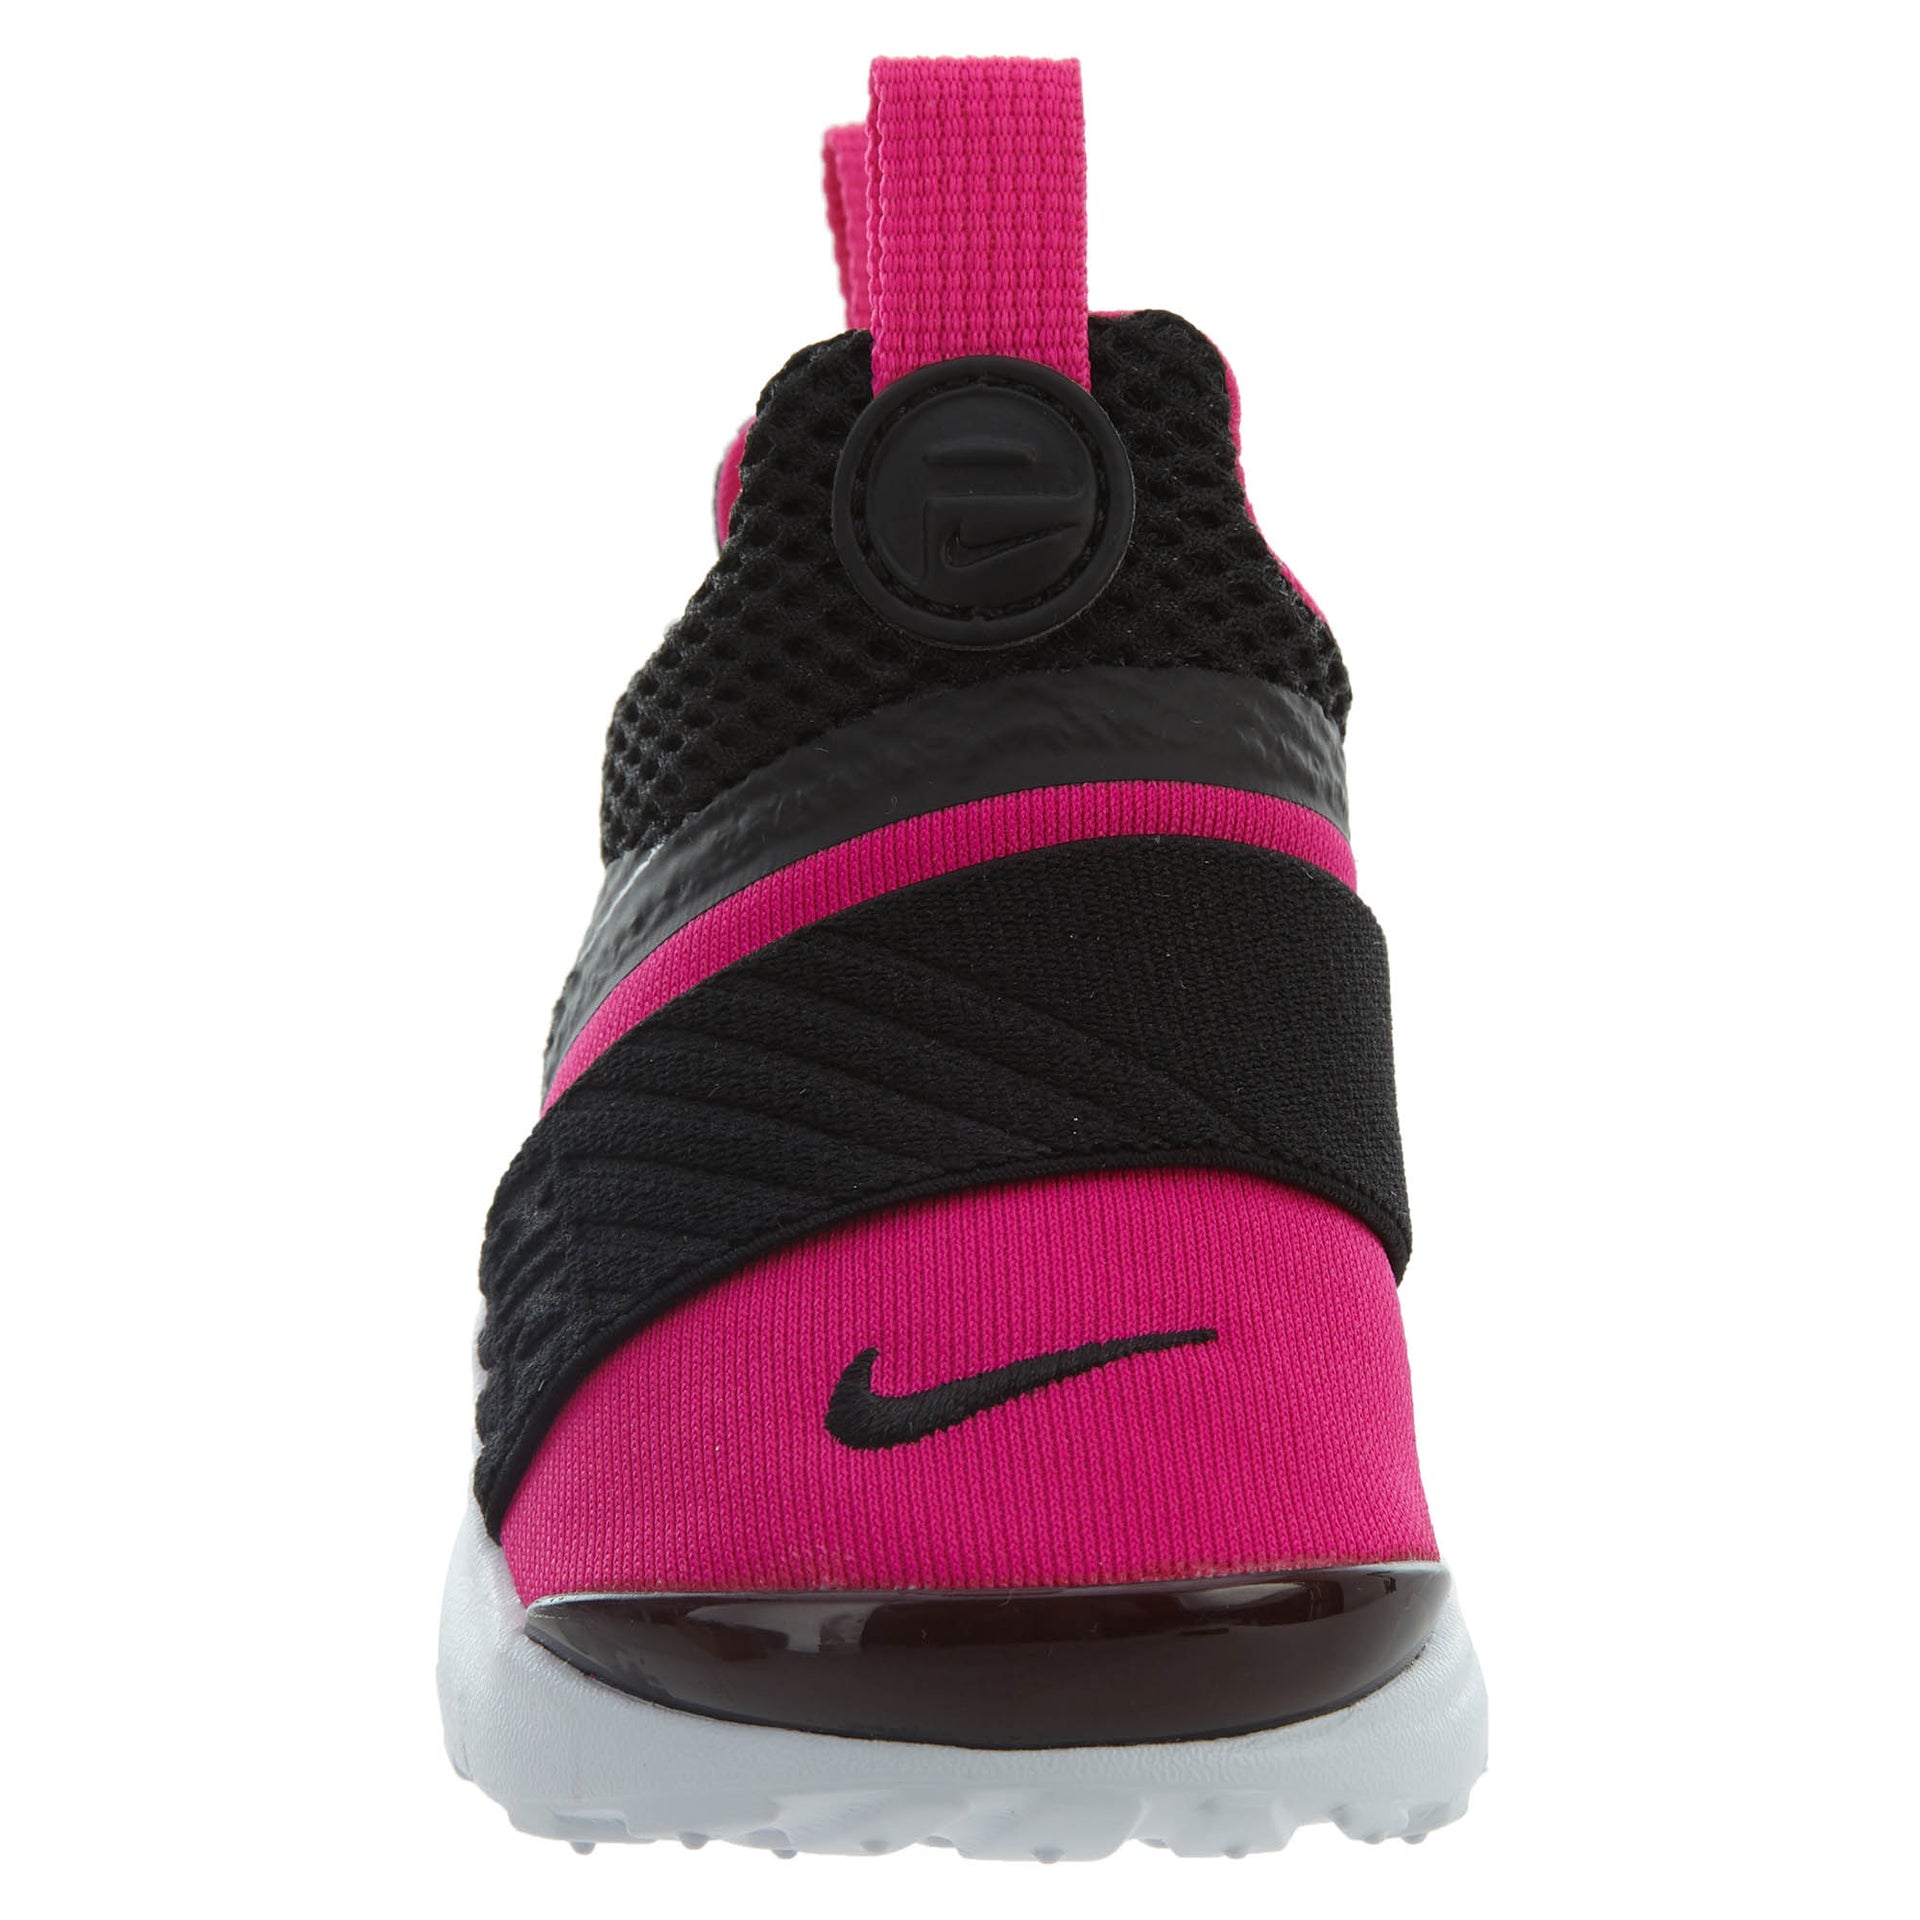 Nike Presto Extreme Toddlers Style : 870021